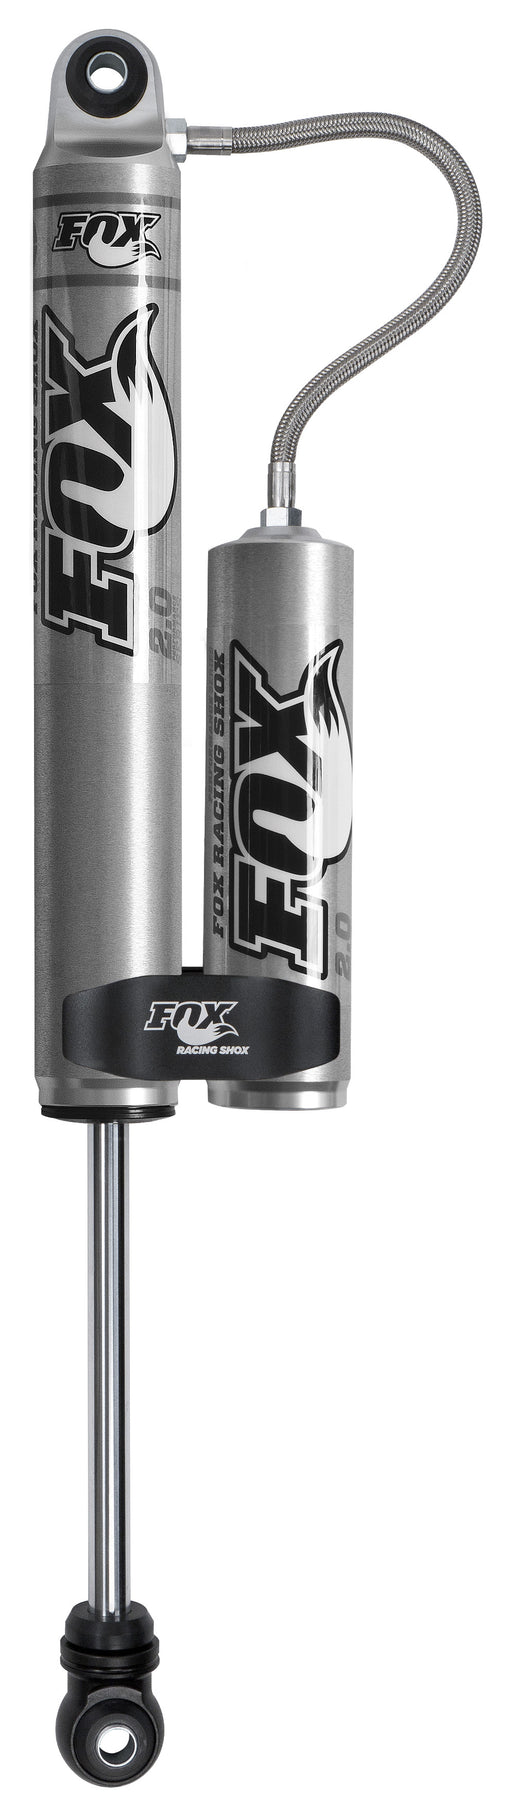 Fox Racing Shox 980-24-966 Performance Series Shock Absorber